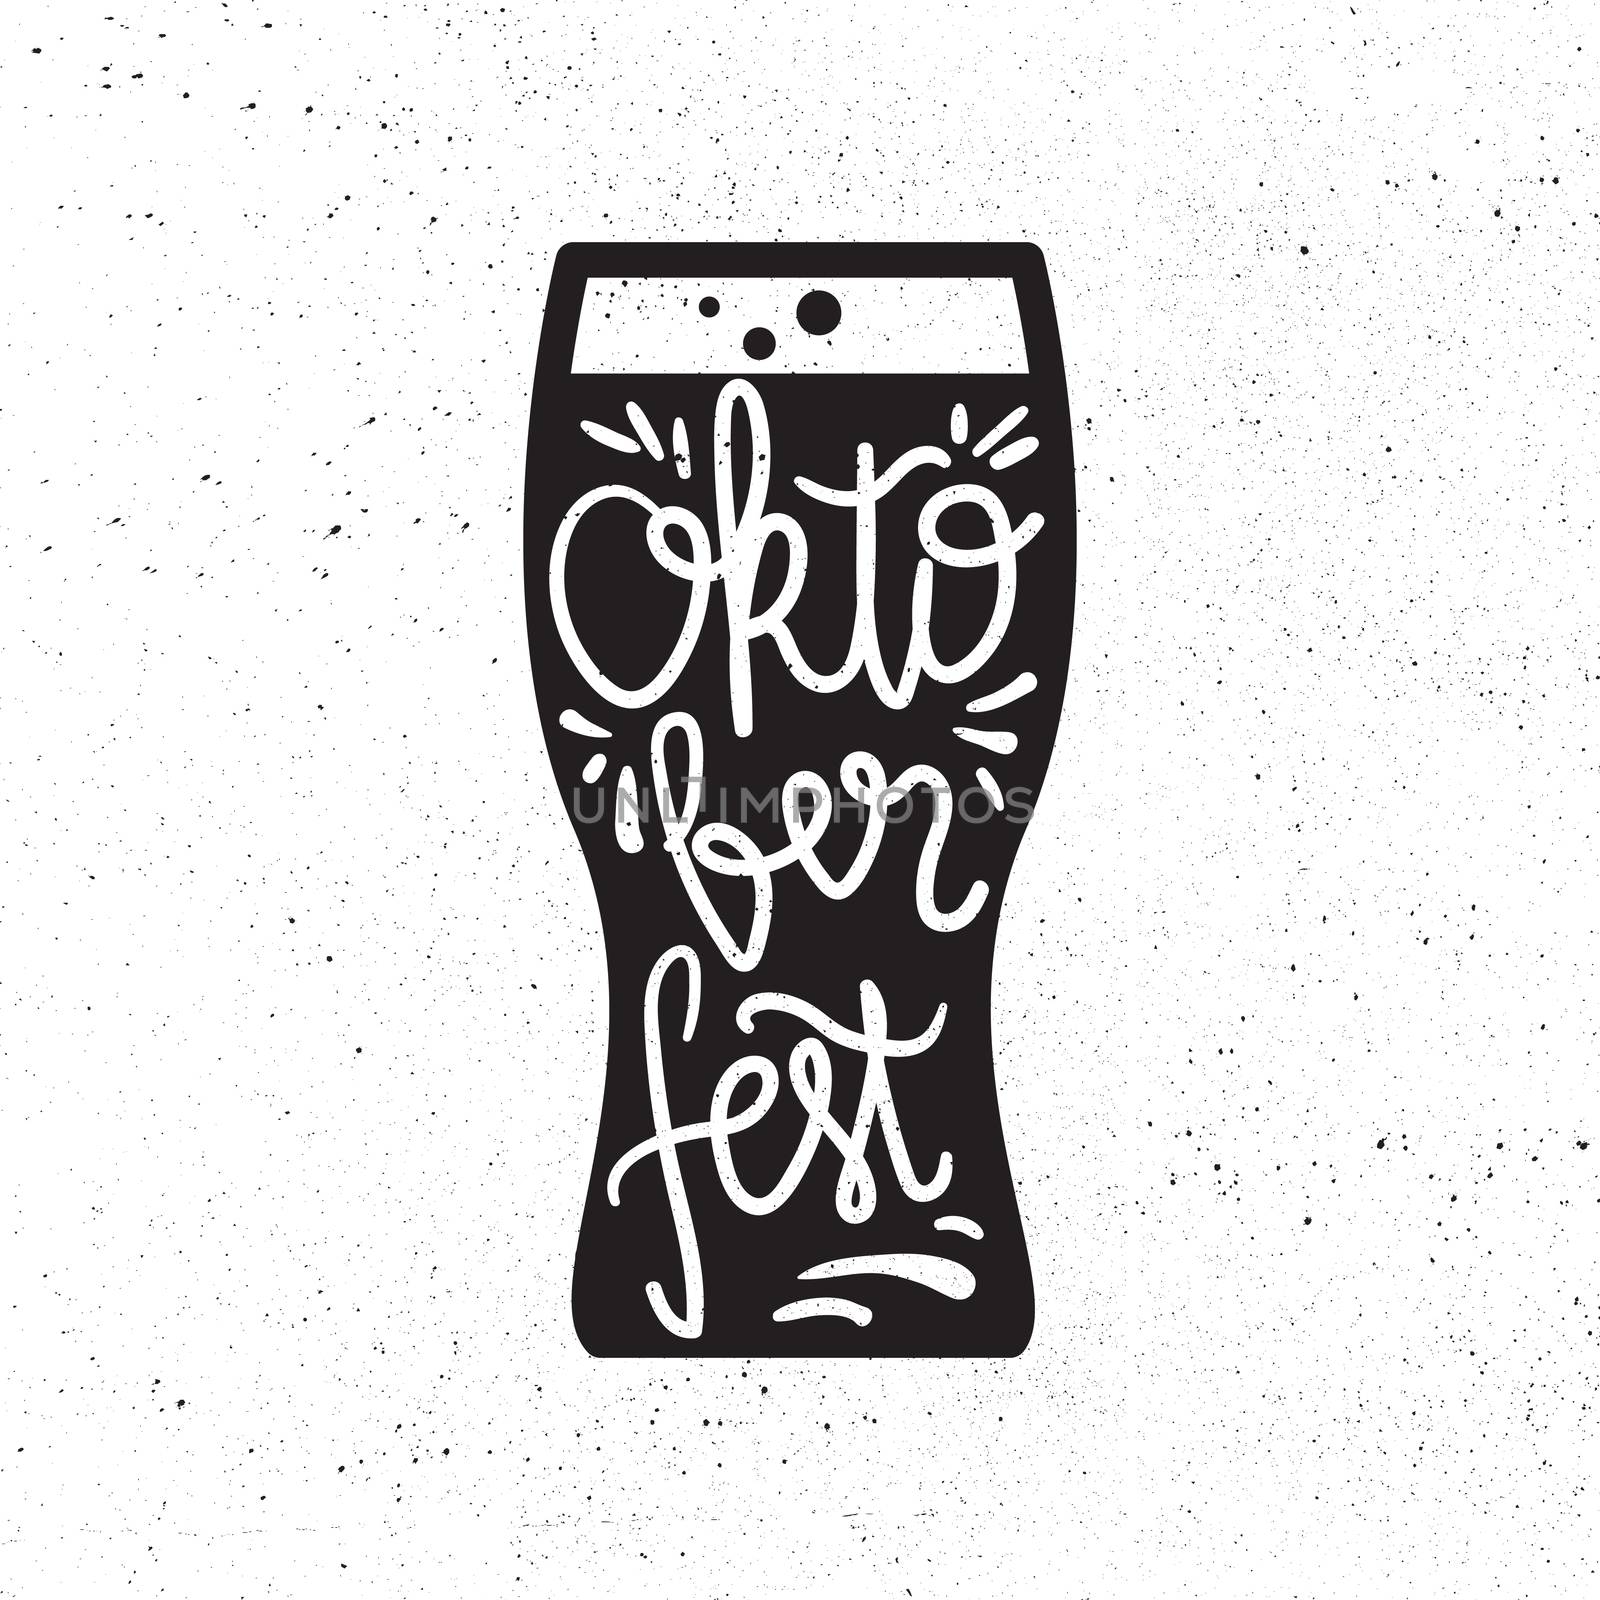 Oktoberfest Lettering. Beer festival handmade design element for badge, sticker, poster and print, t-shirt, apparel. Vector